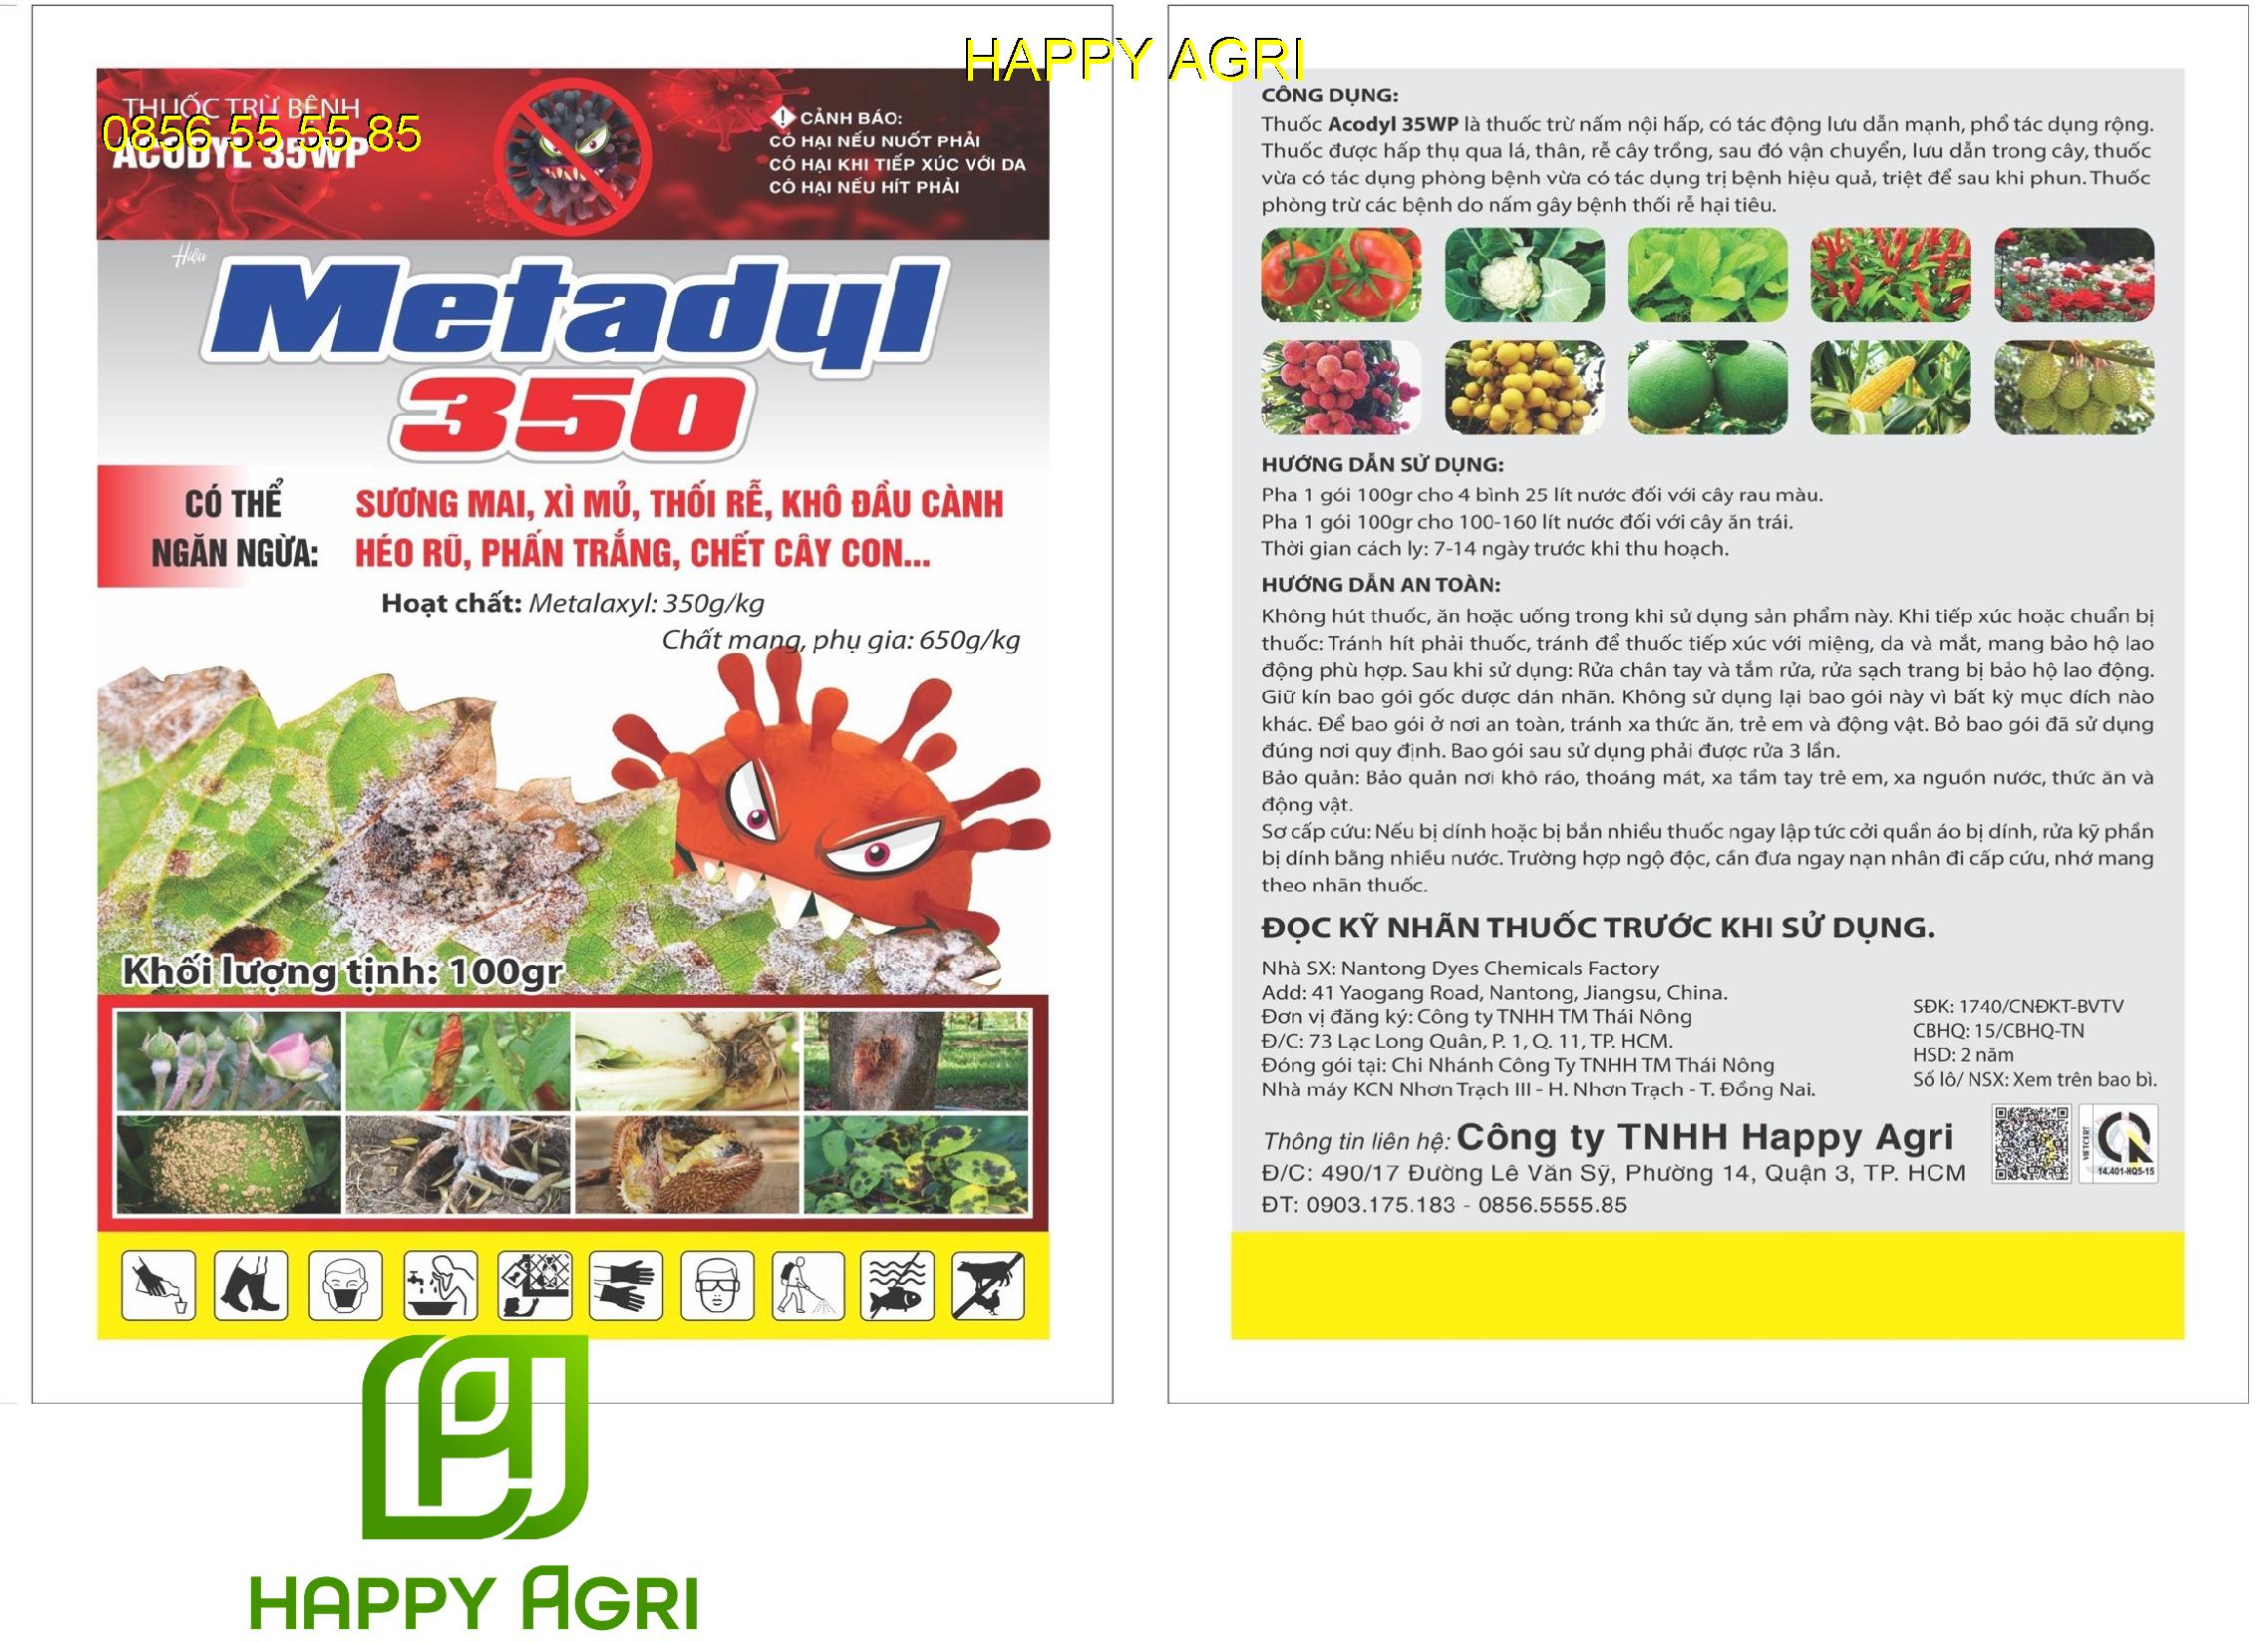 METADYL 350 - thuốc trừ bệnh ACODYL 35WP